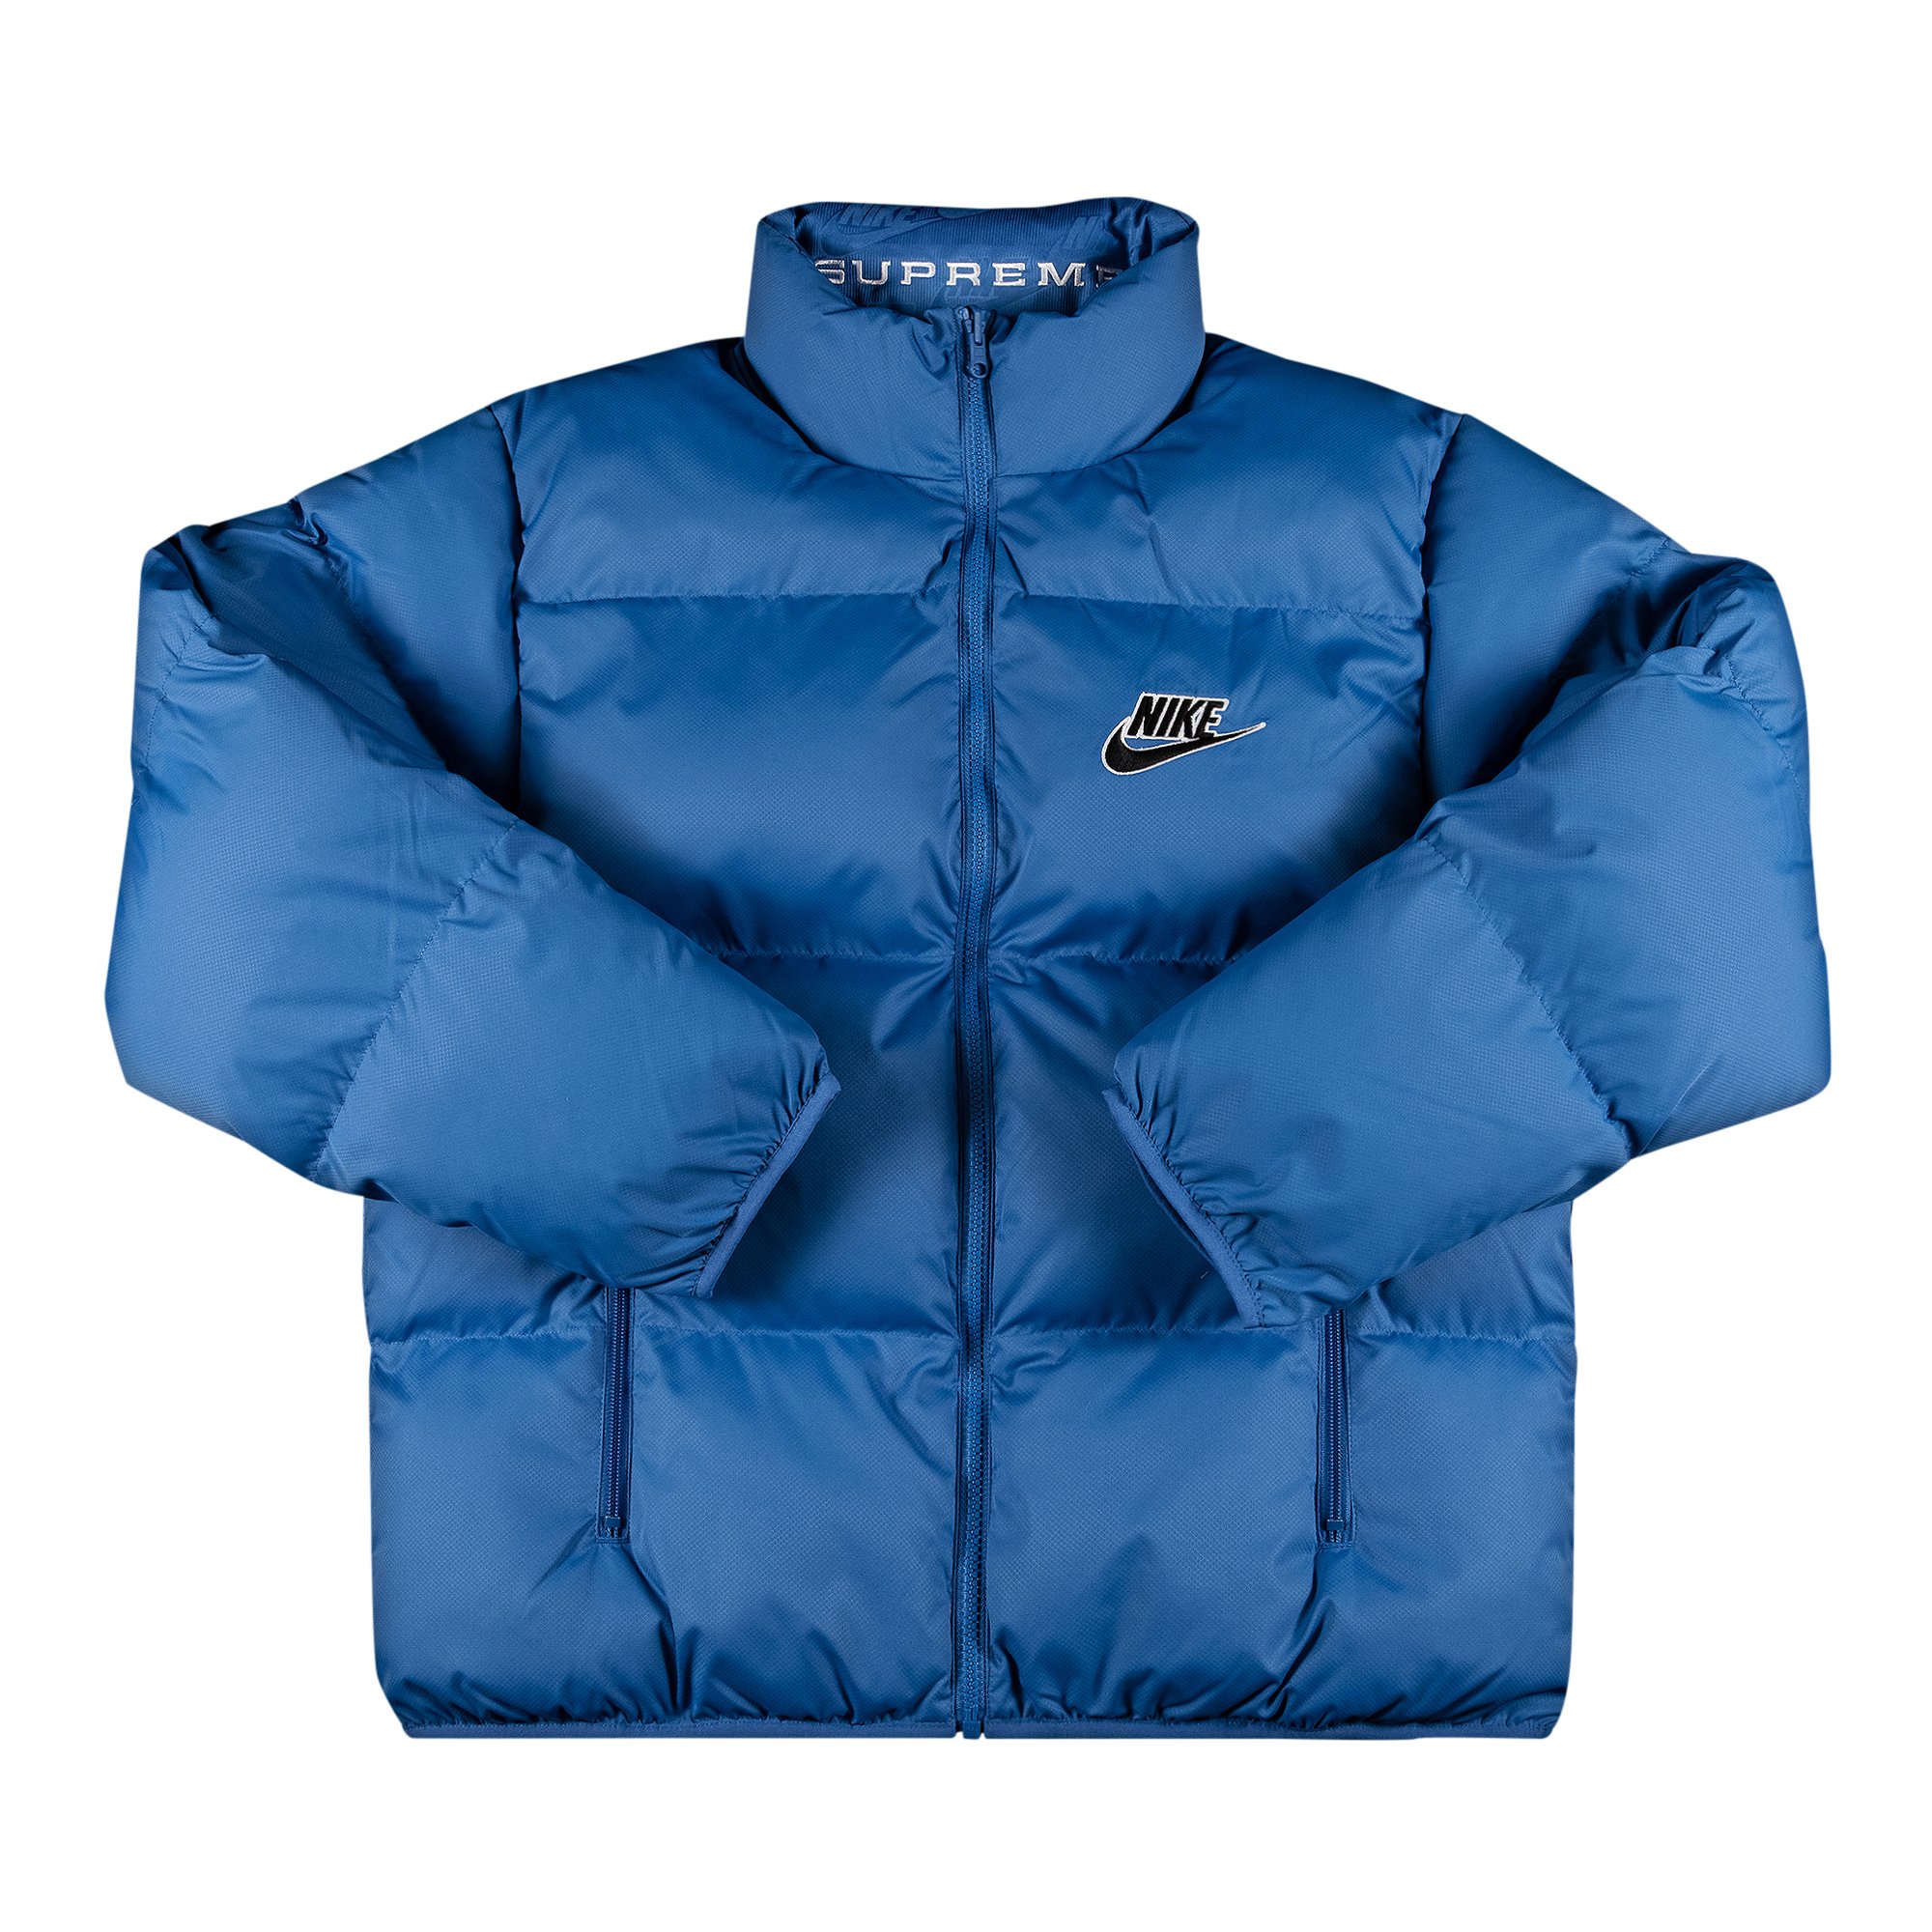 Buy Supreme x Nike Reversible Puffy Jacket 'Blue' - SS21J8 BLUE | GOAT